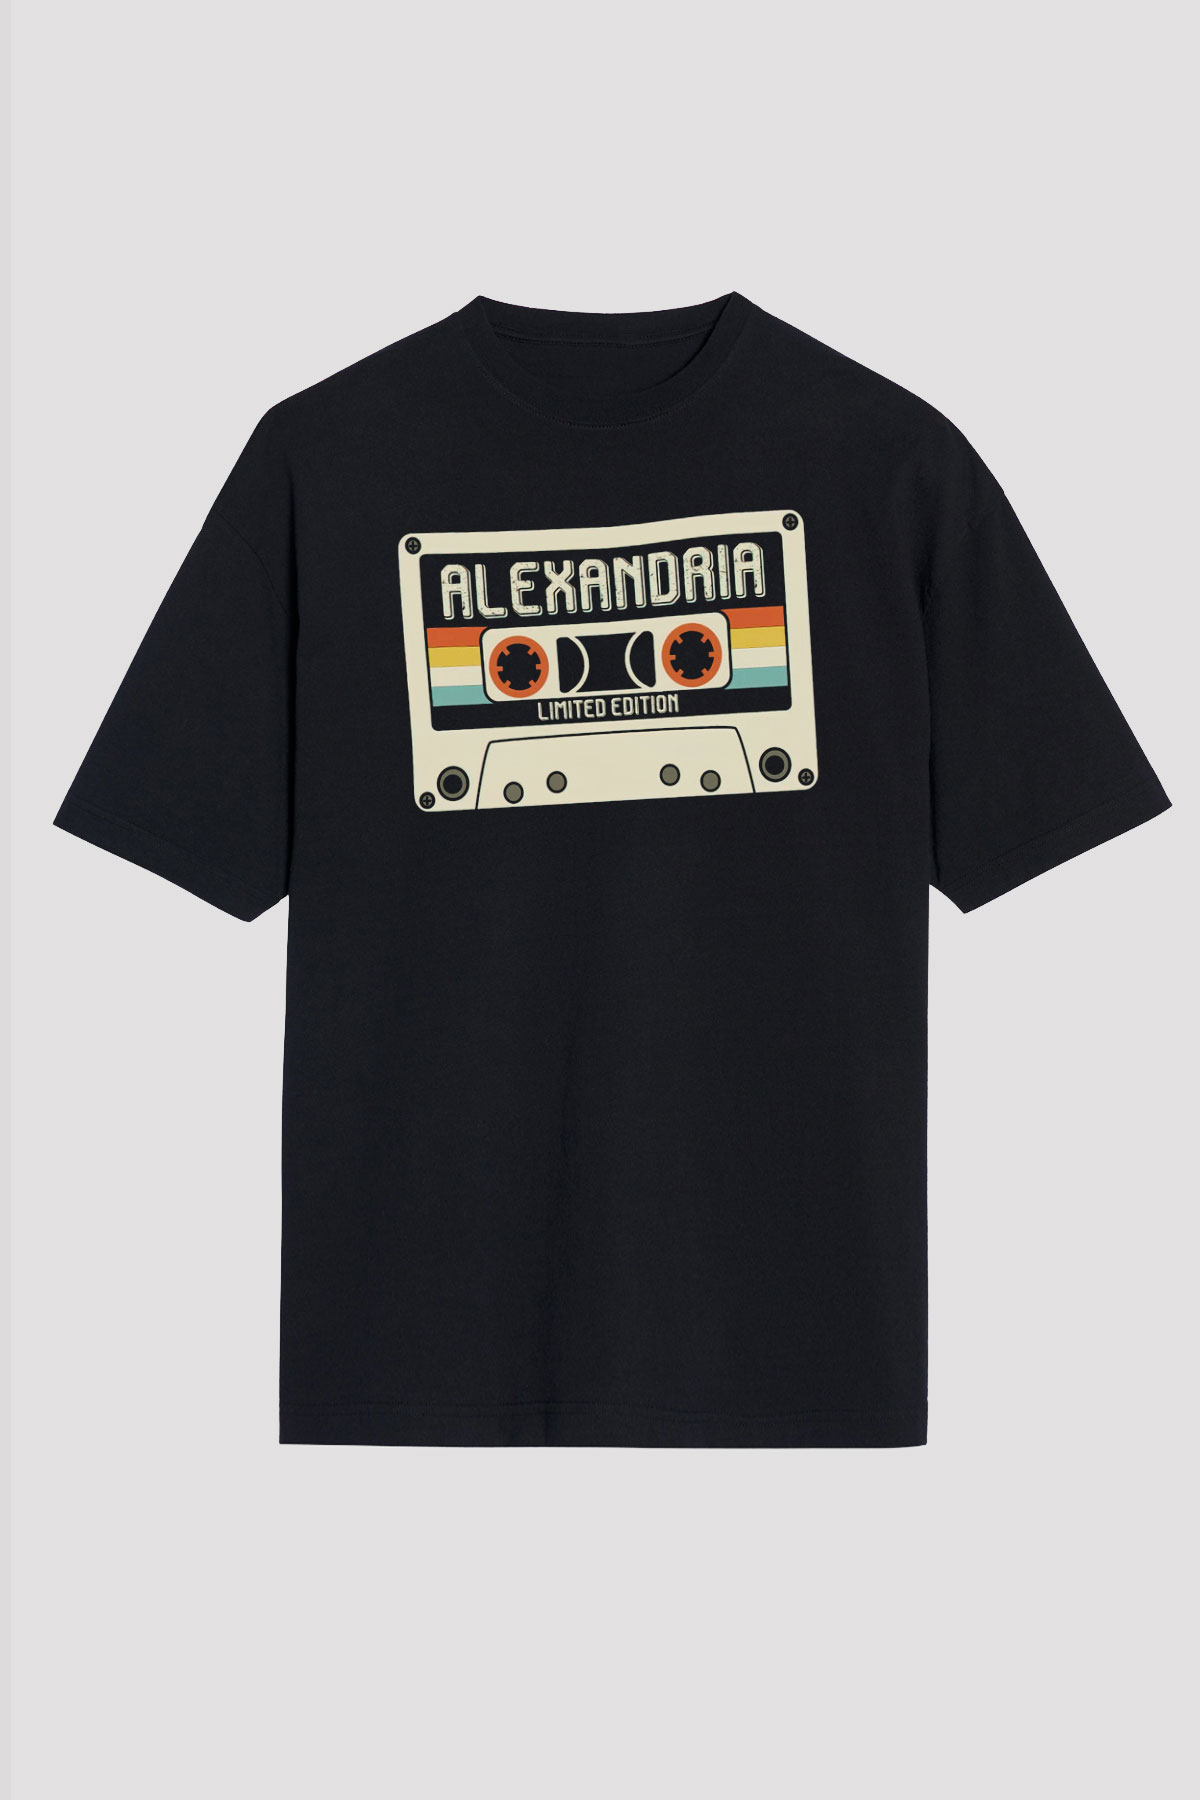 Asking Alexandria ,Music Band ,Unisex Tshirt 39